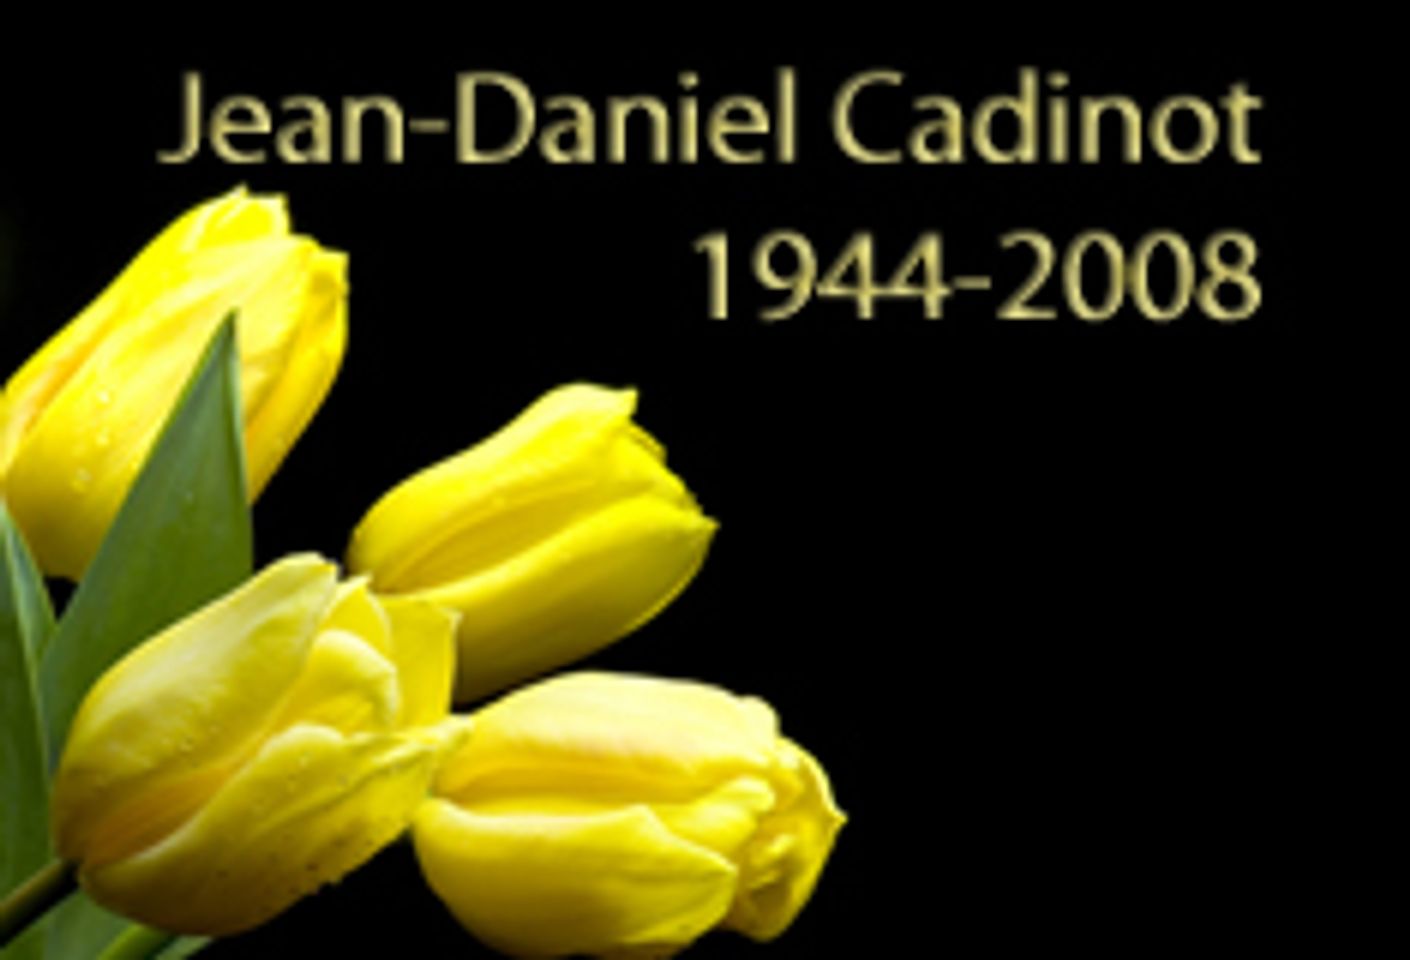 Jean-Daniel Cadinot, 1944-2008